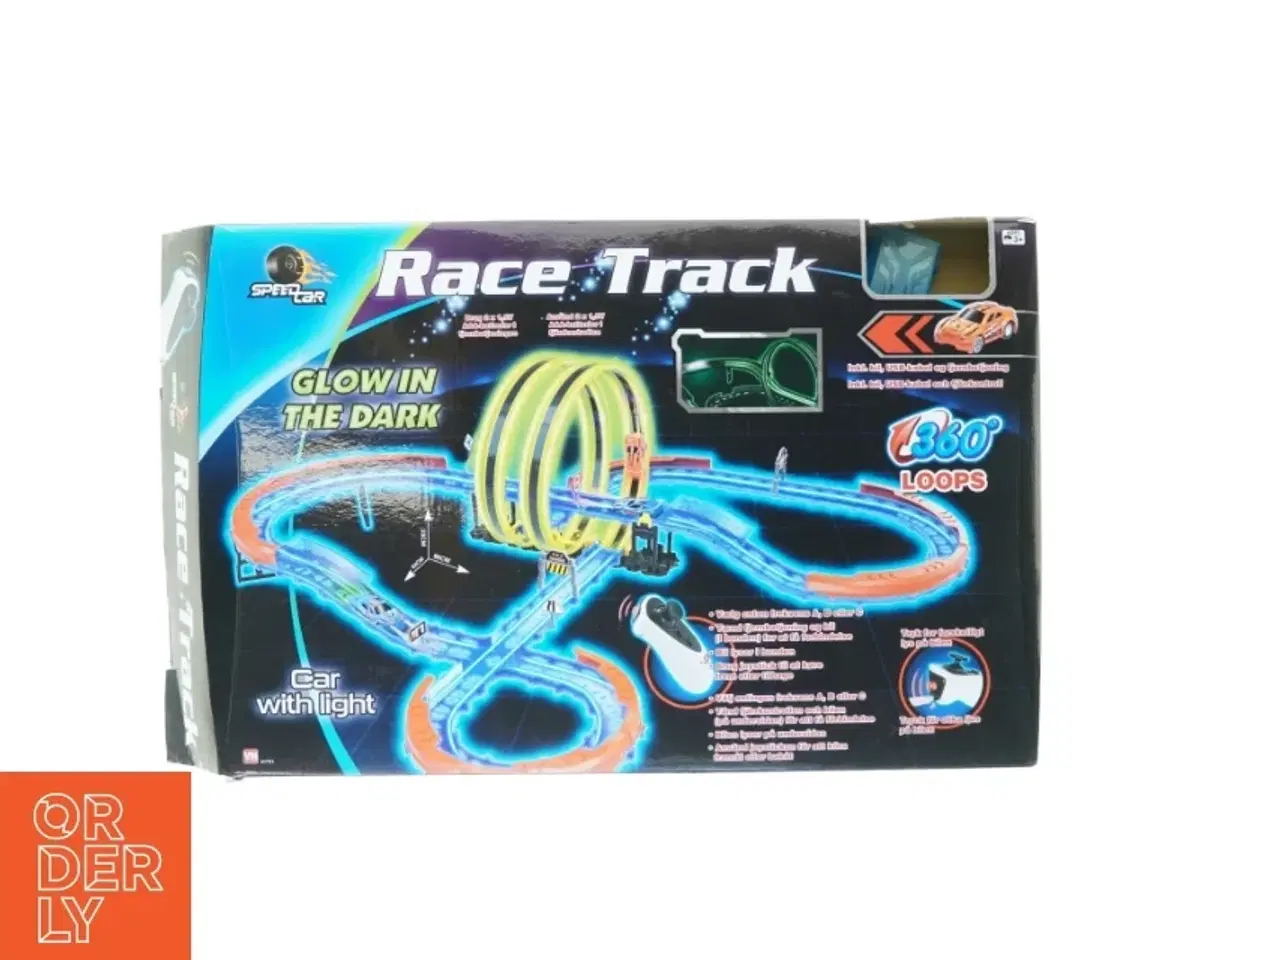 Billede 1 - Glow in the dark Race track fra Speed Car (str. 54 x 36 cm)